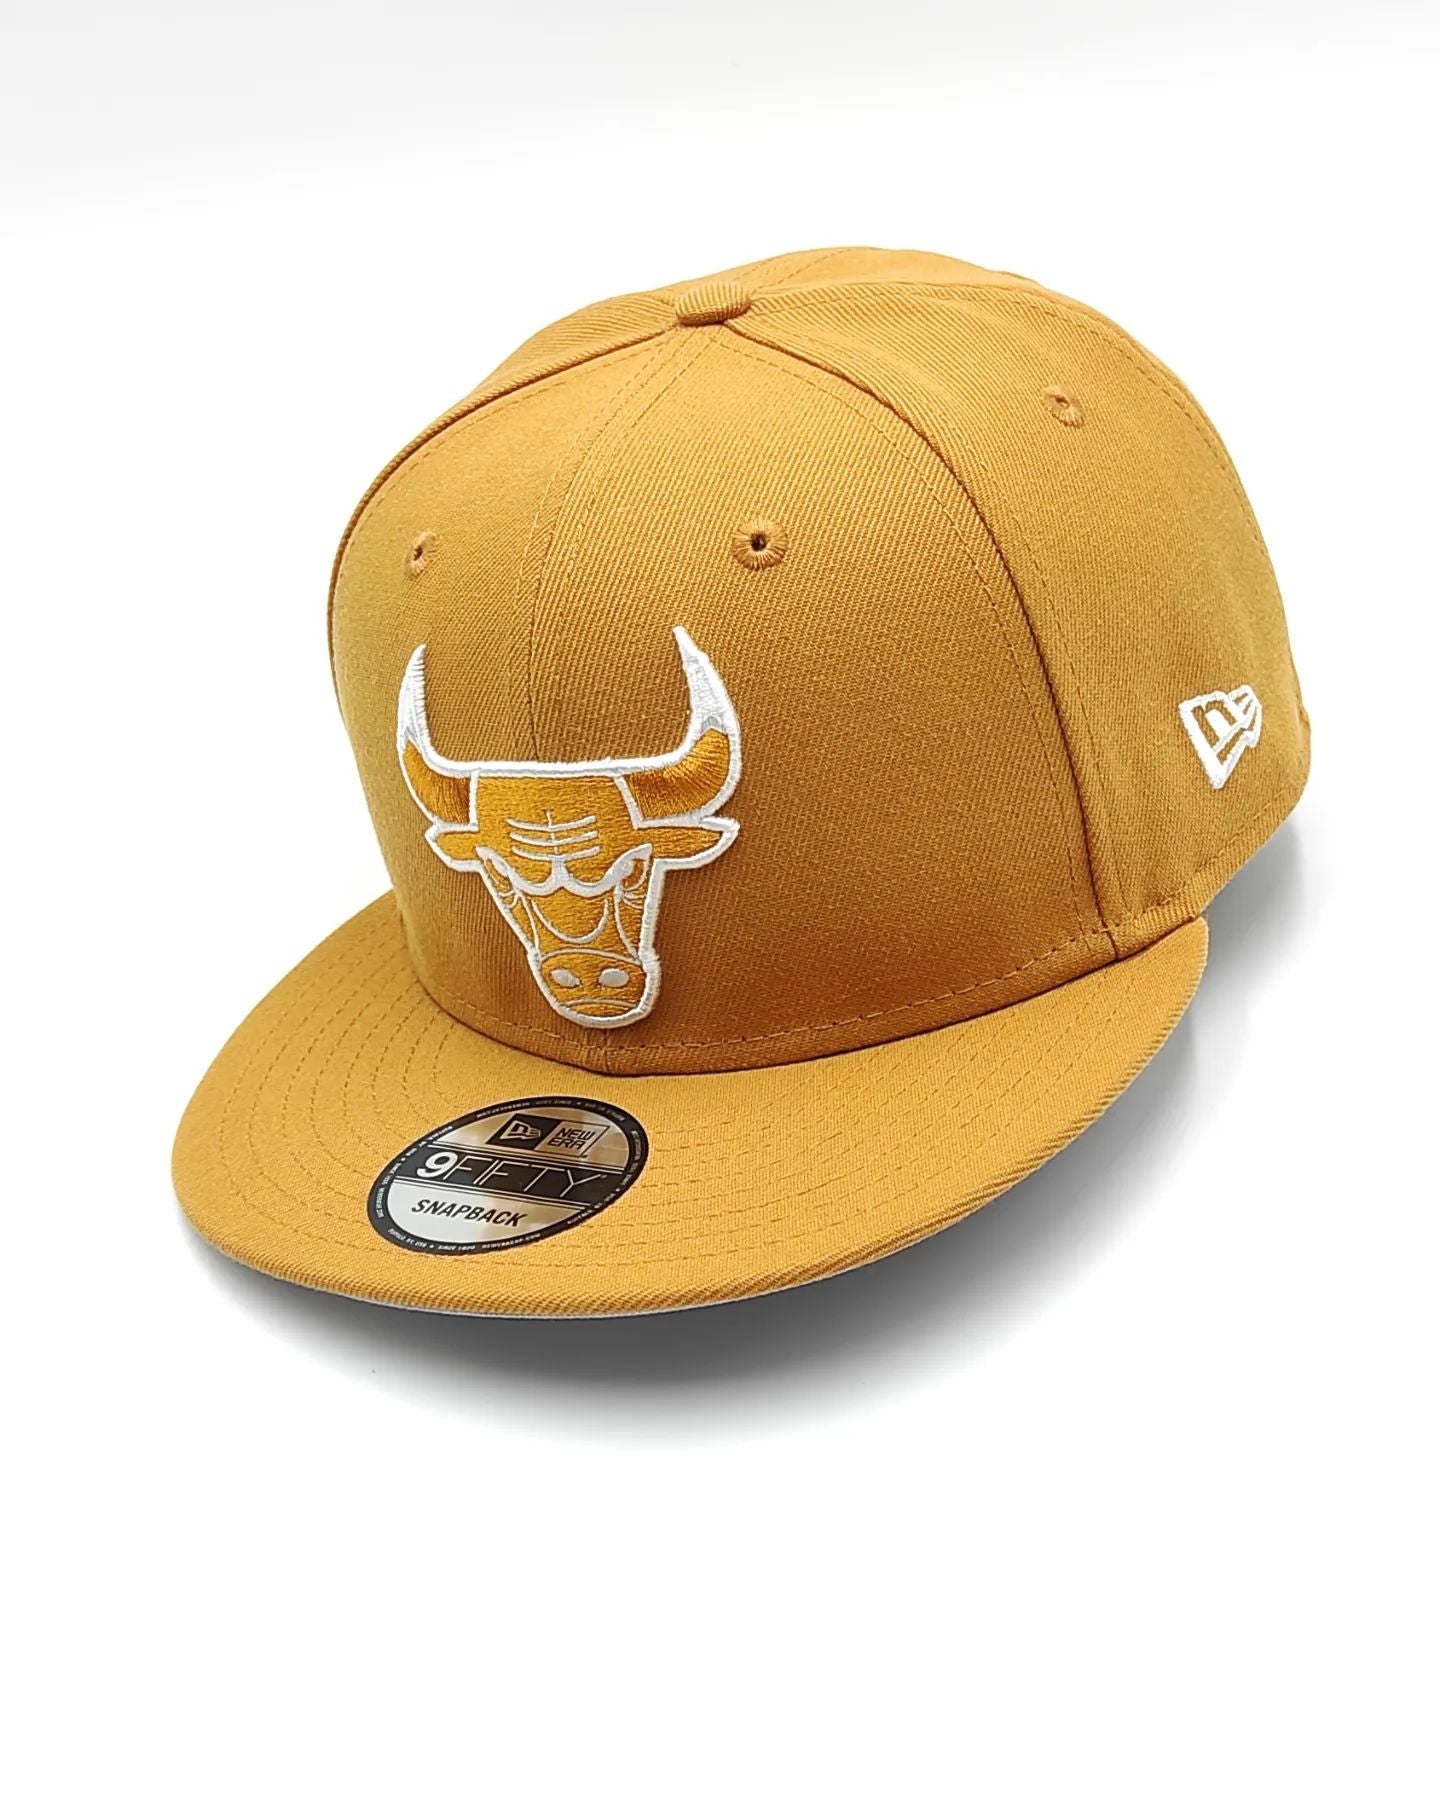 Pro Image Sports RD - Gorra Chicago Bulls, Gold Edition. Disponibles en  @proimagesportsrd. . 100% original, 100% tu estilo . Visitanos en  @megacentrord, local 83-A. Información: 809.788.2725 y al WhatsApp  829.641.7825. #bulls #gold #gorras #rd